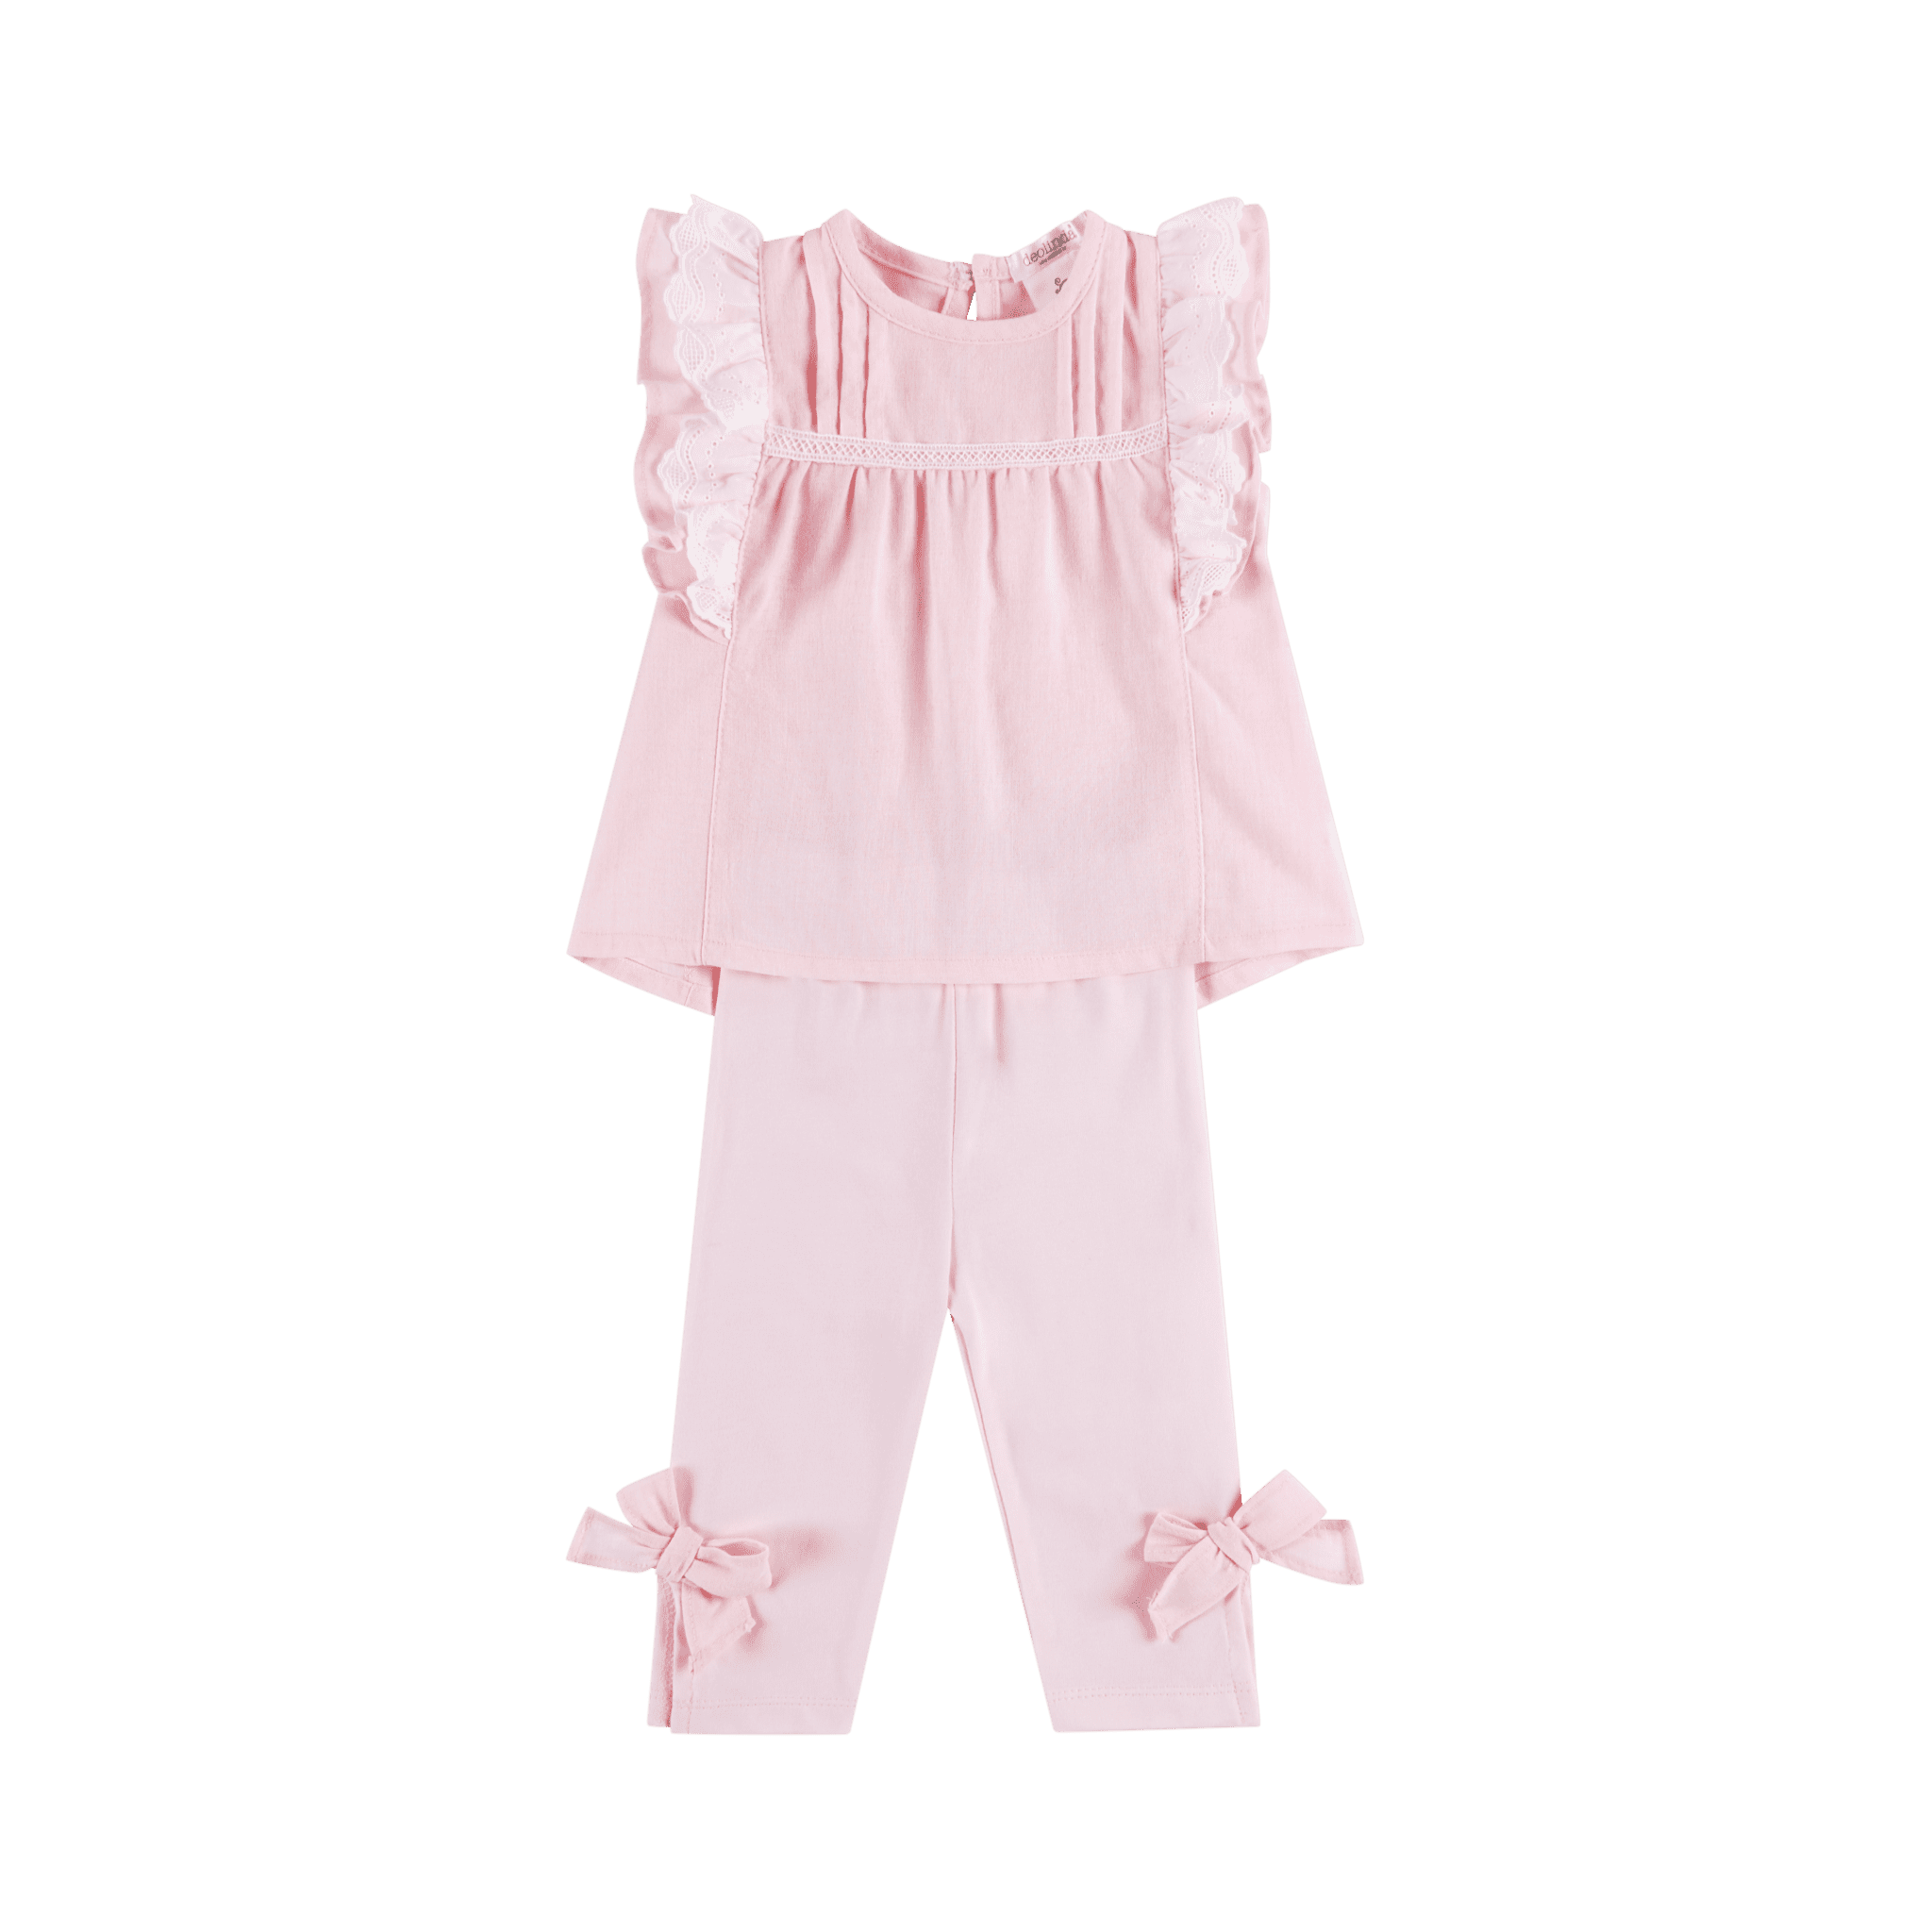 Deolinda Clarissa Legging Set 236209 - Little Angels Childrenswear